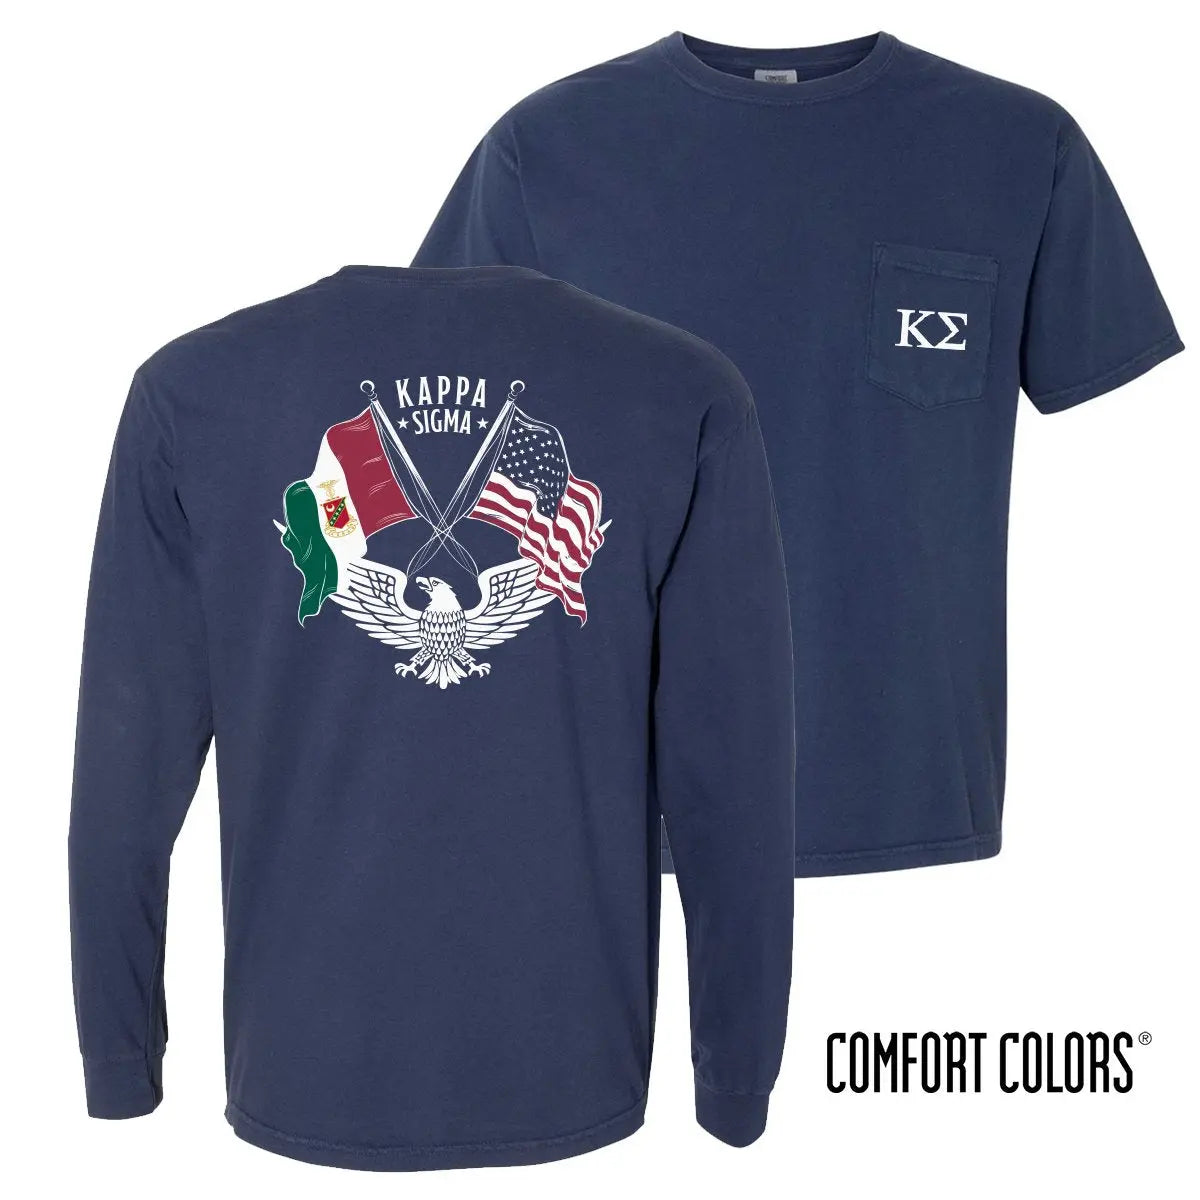 Kappa Sig Comfort Colors Long Sleeve Navy Patriot tee – Kappa Sigma  Official Store